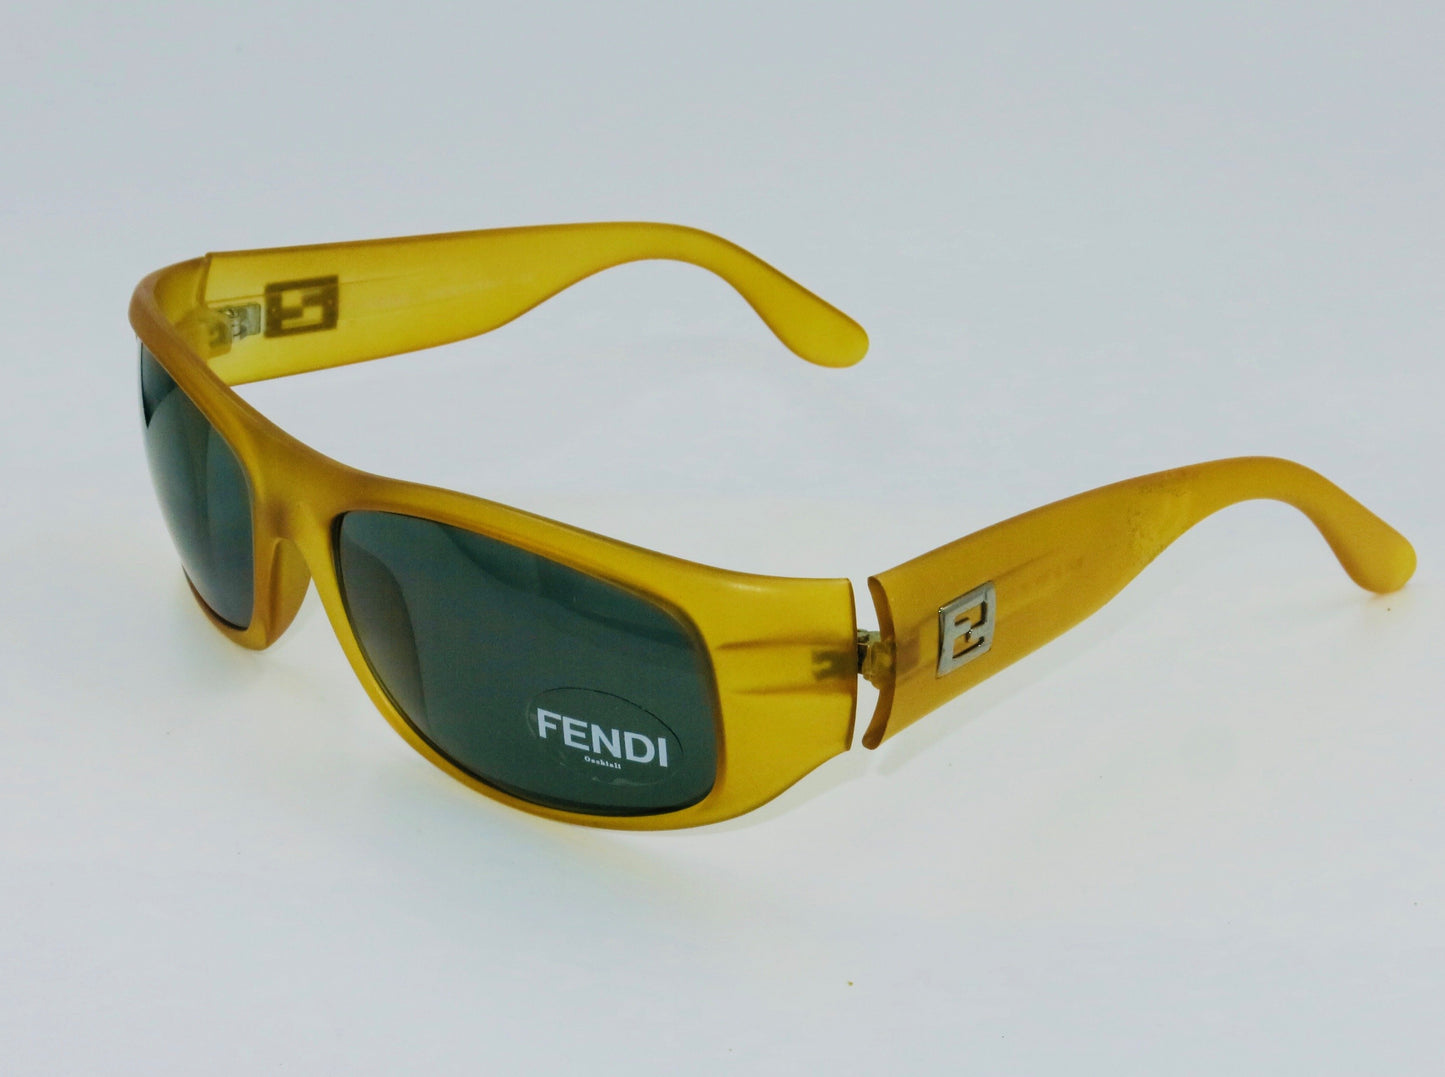 Fendi Sunglasses SL 7635 | Sunglasses by Fendi